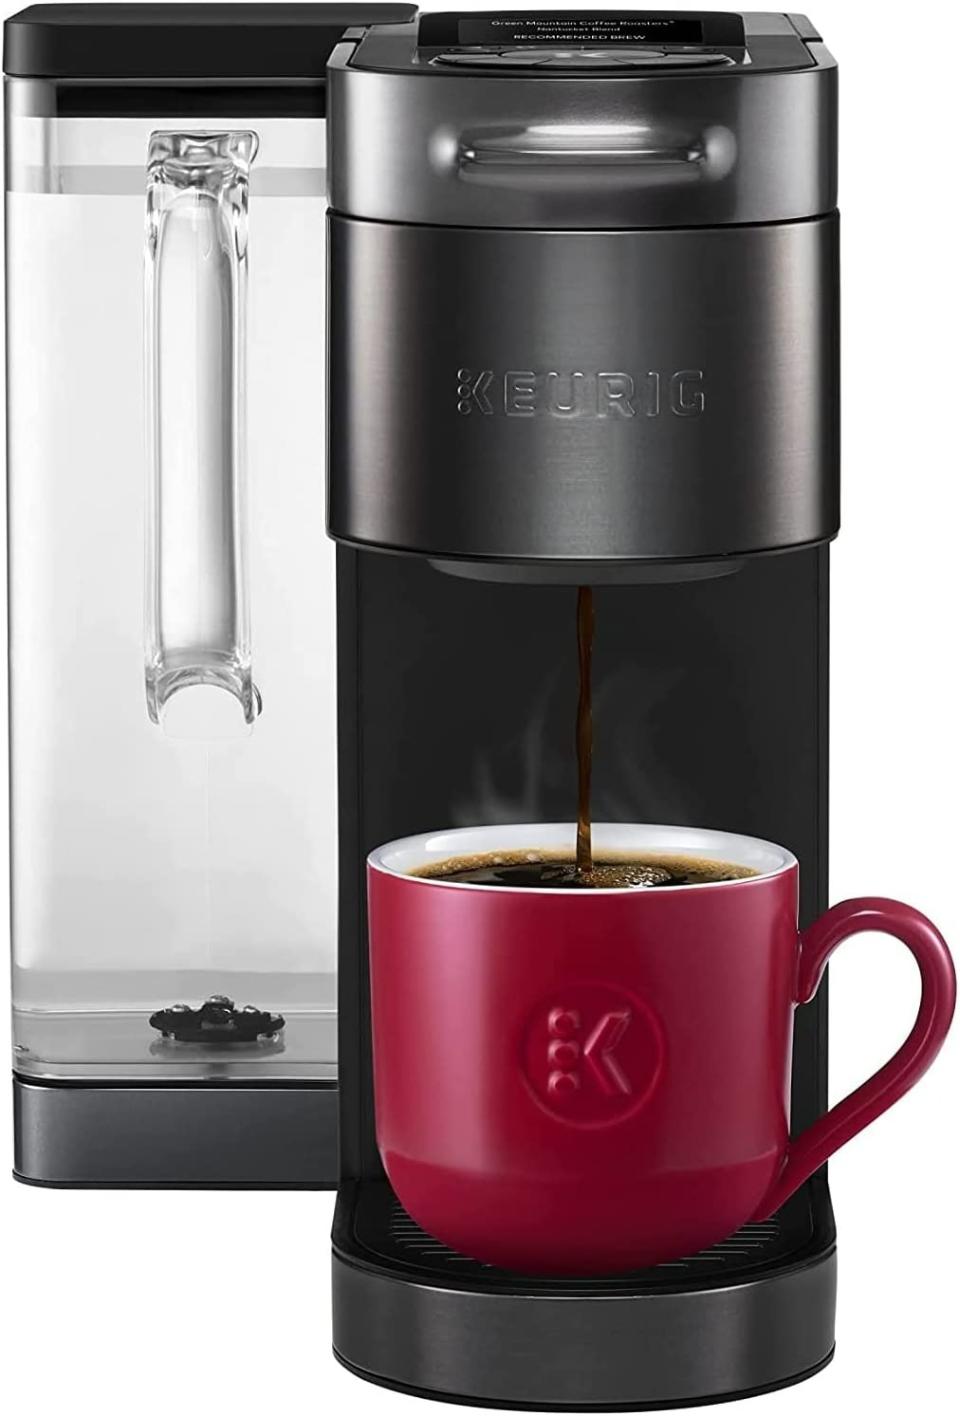 13 Best Keurig Coffee Makers of 2023 | Reviews, Features, Pricing